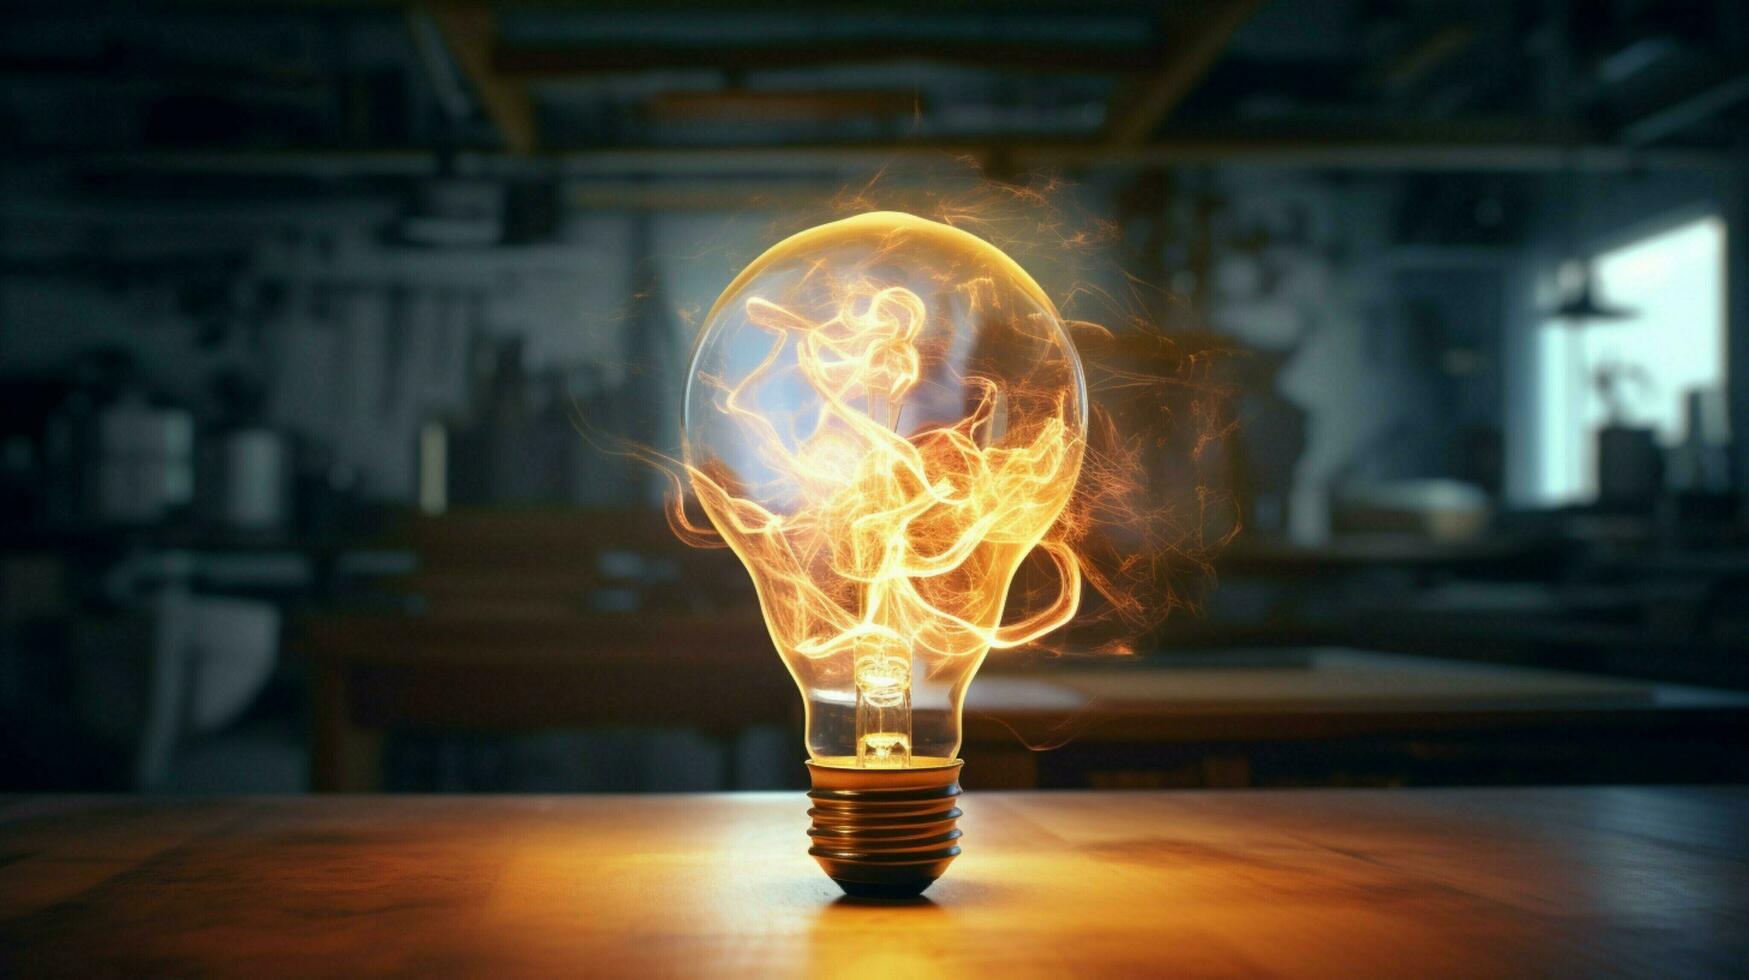 glowing electric light igniting filament inspiring creative photo